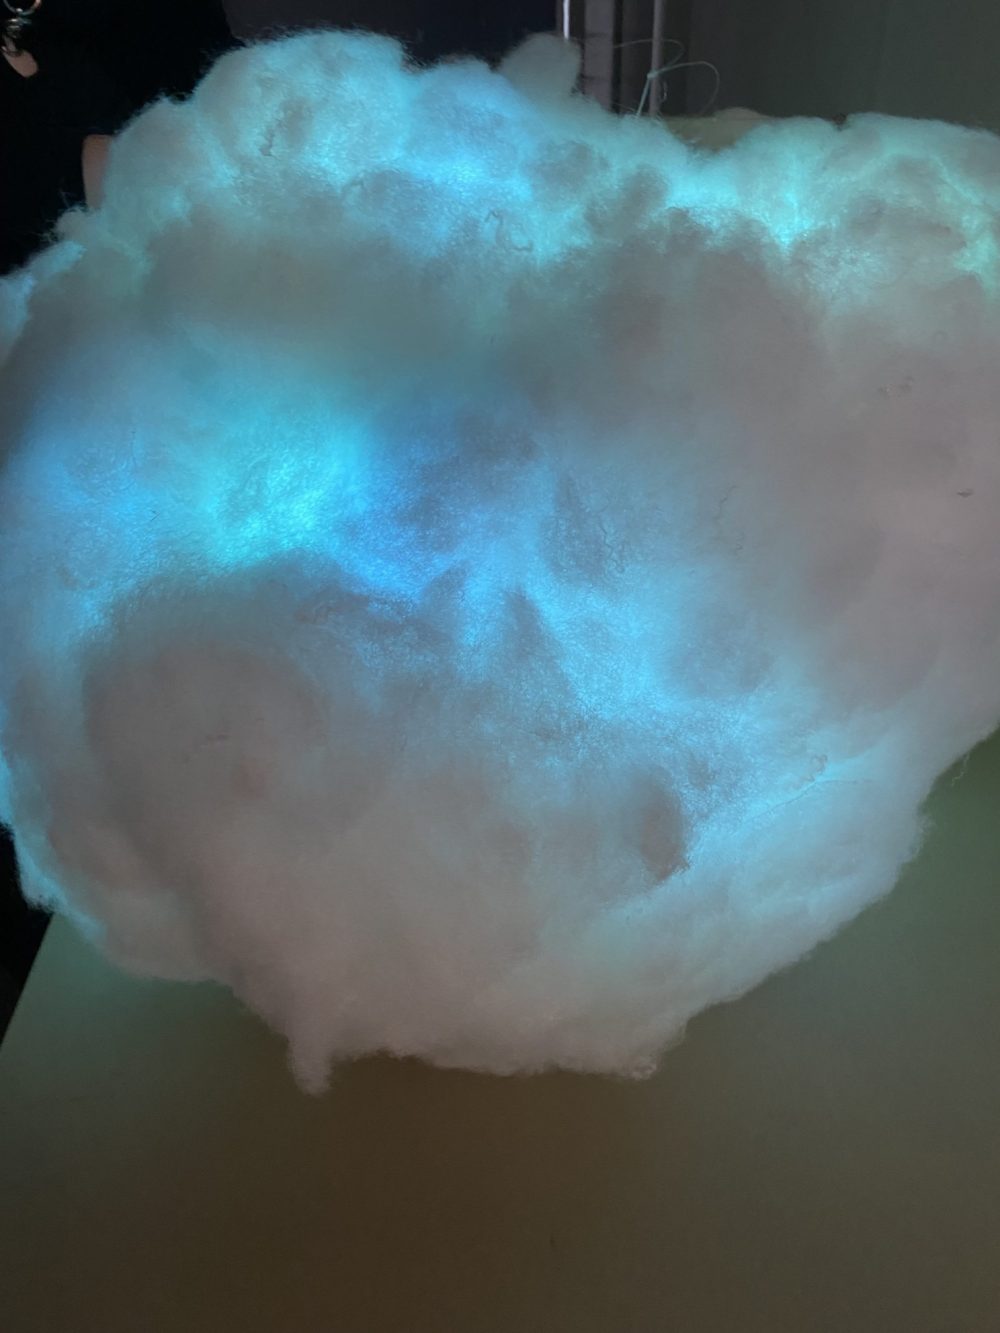 A glowing cloud.